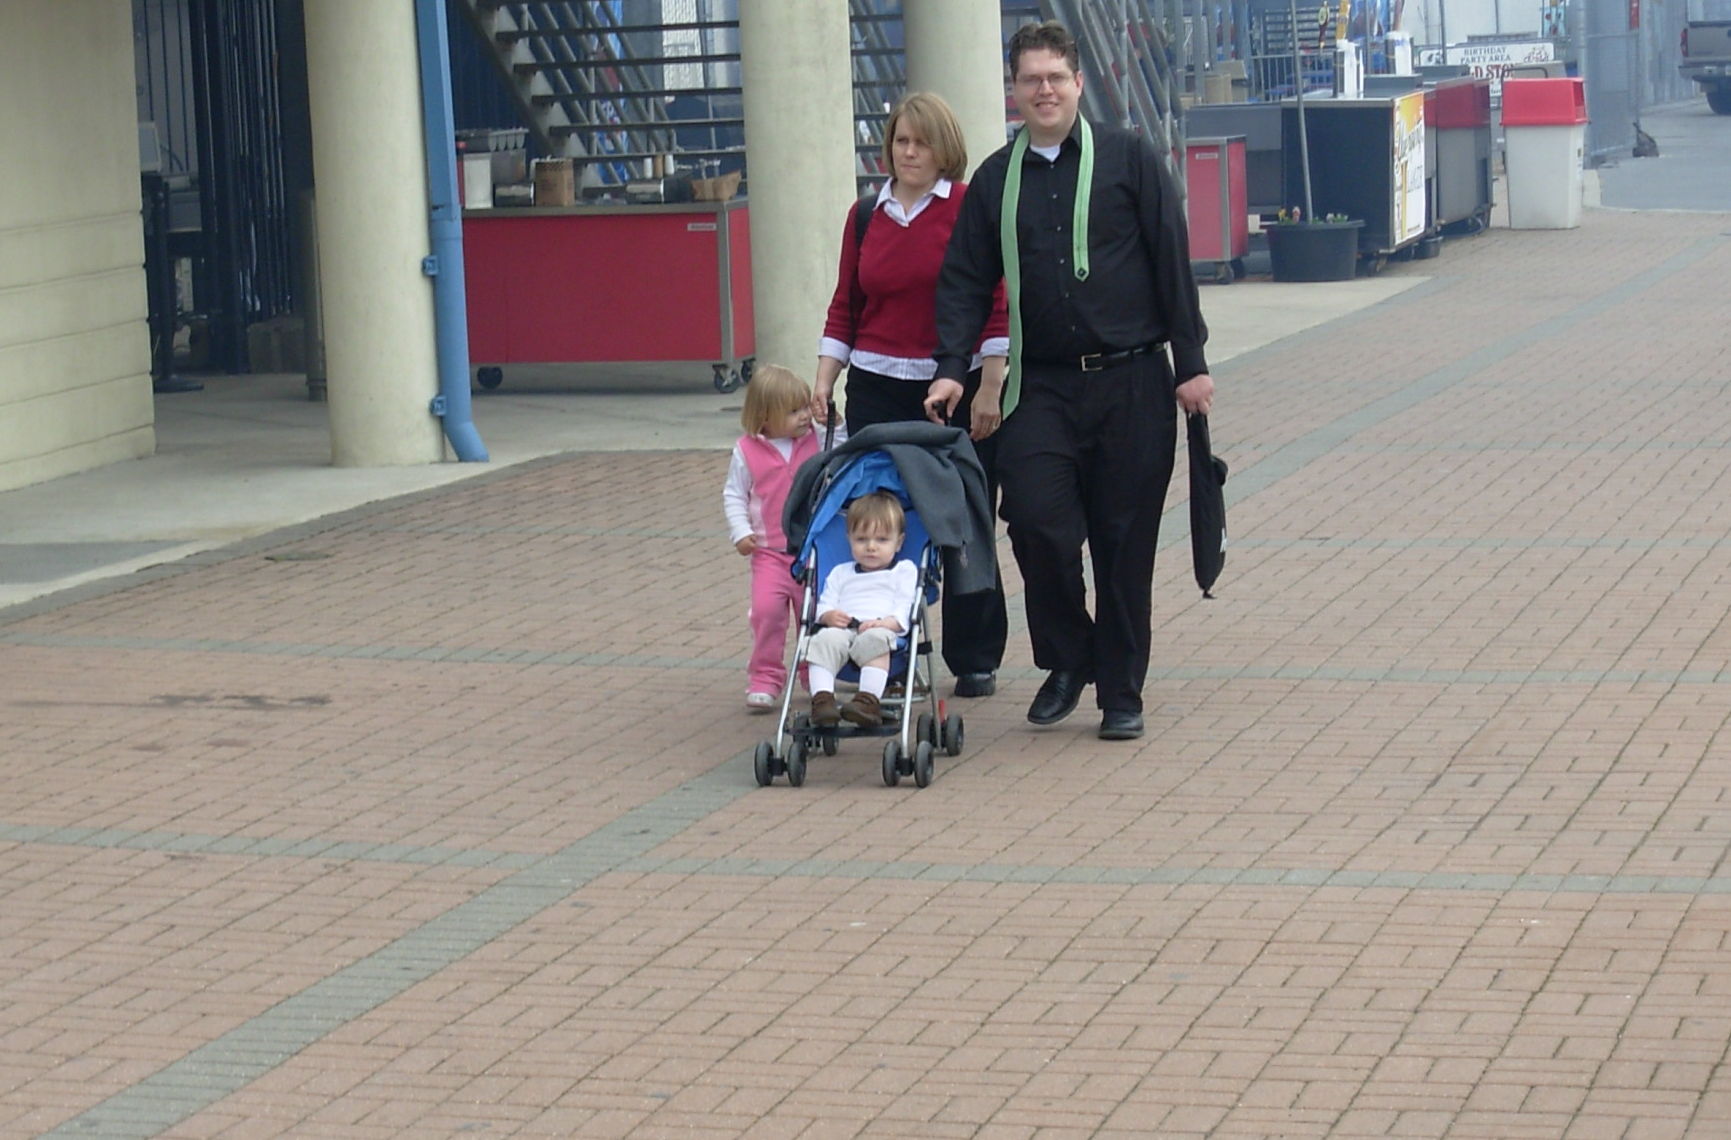 The Brye family arrives at the baseball stadium...
